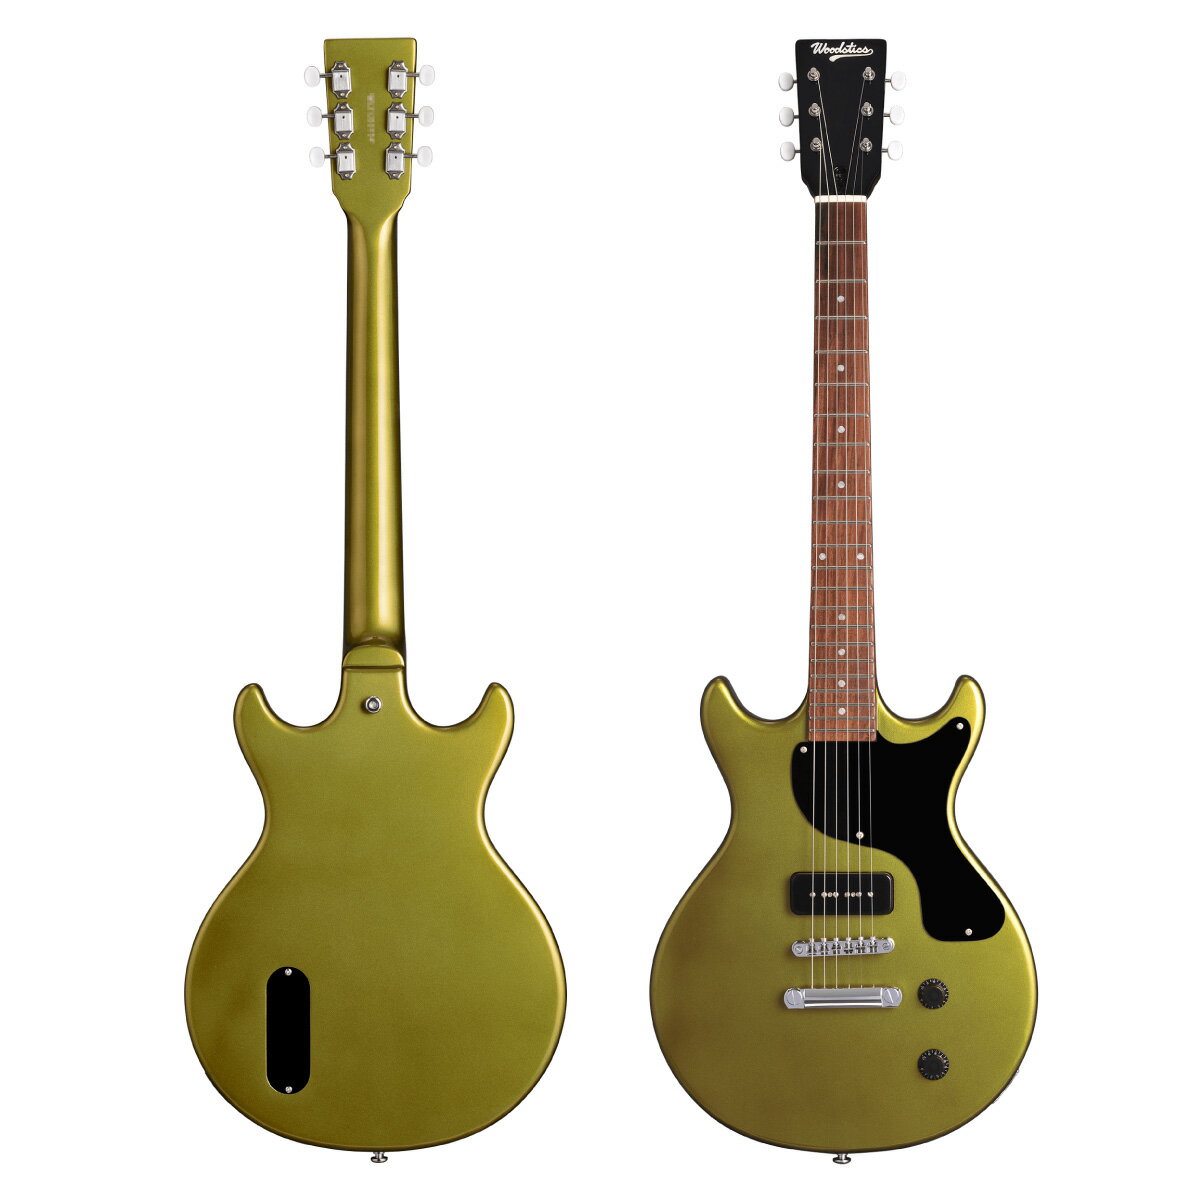 Woodstics Guitars WS-SR-Jr -Citron Green- Produced by Ken Yokoyama 新品 シトロングリーン ウッドスティックス 横山健 ESPブランド Les Paul Junior,レスポールジュニア,助六 緑 Electric Guitar,エレキギター